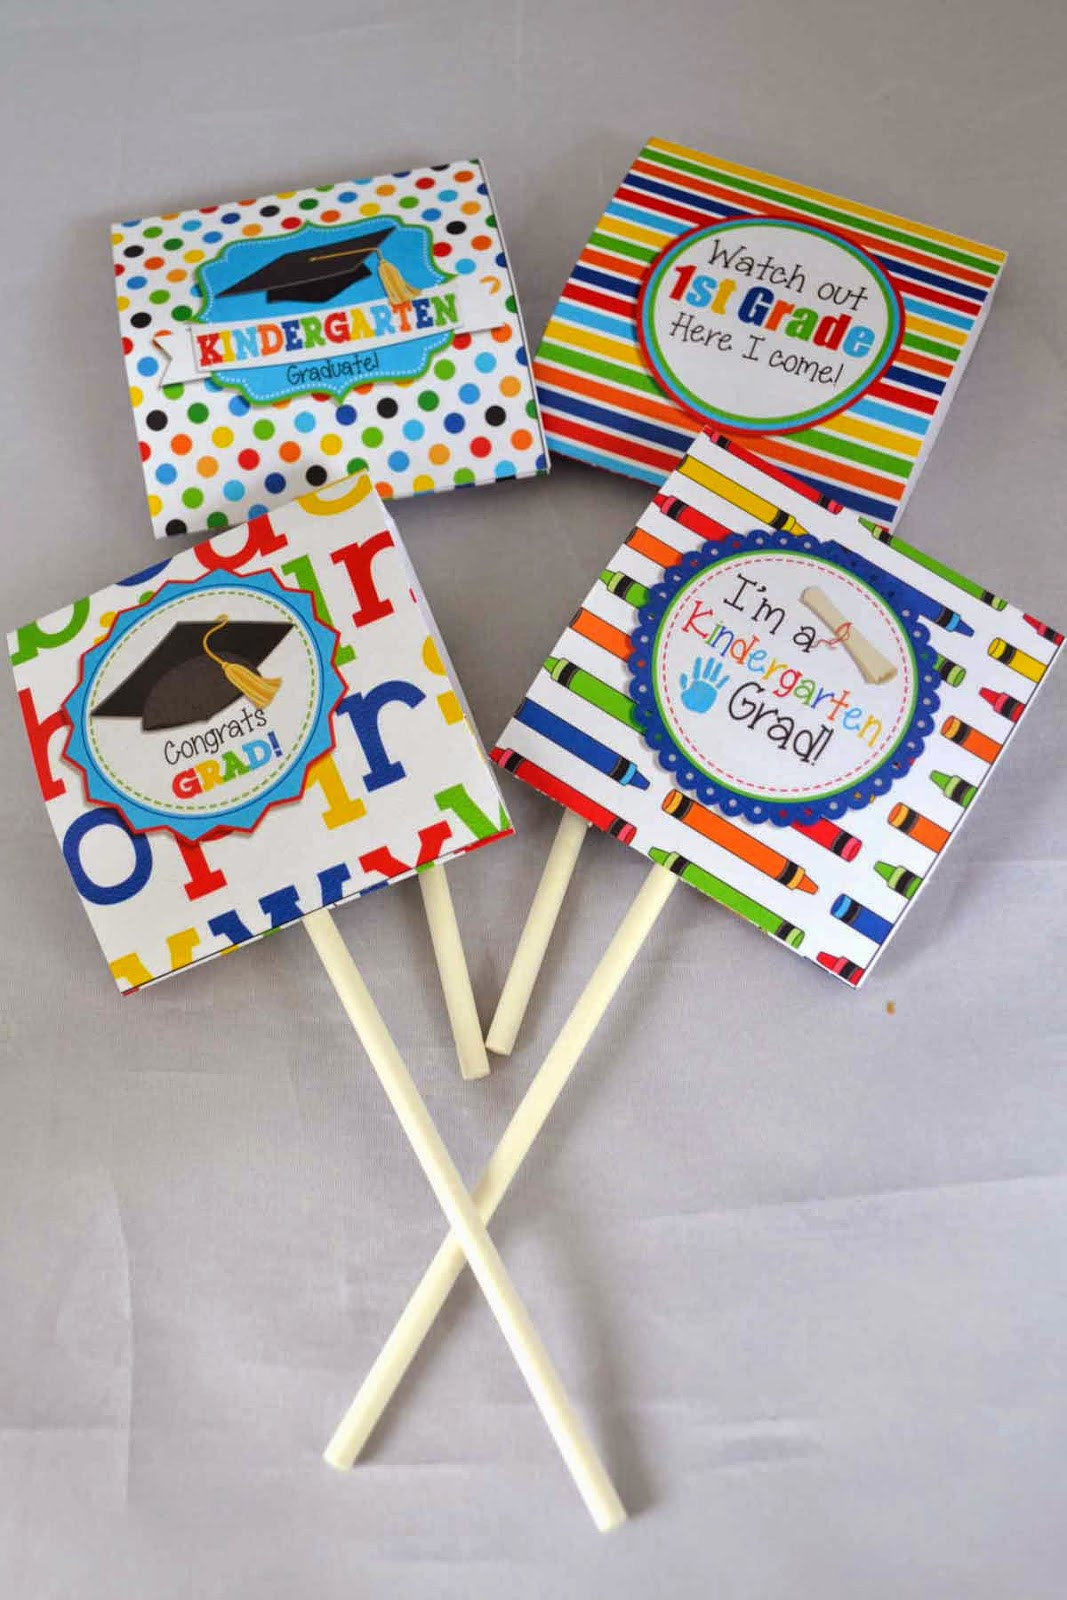 Boy Preschool Graduation Gift Ideas
 A Manda Creation Kindergarten Graduation Party Printables